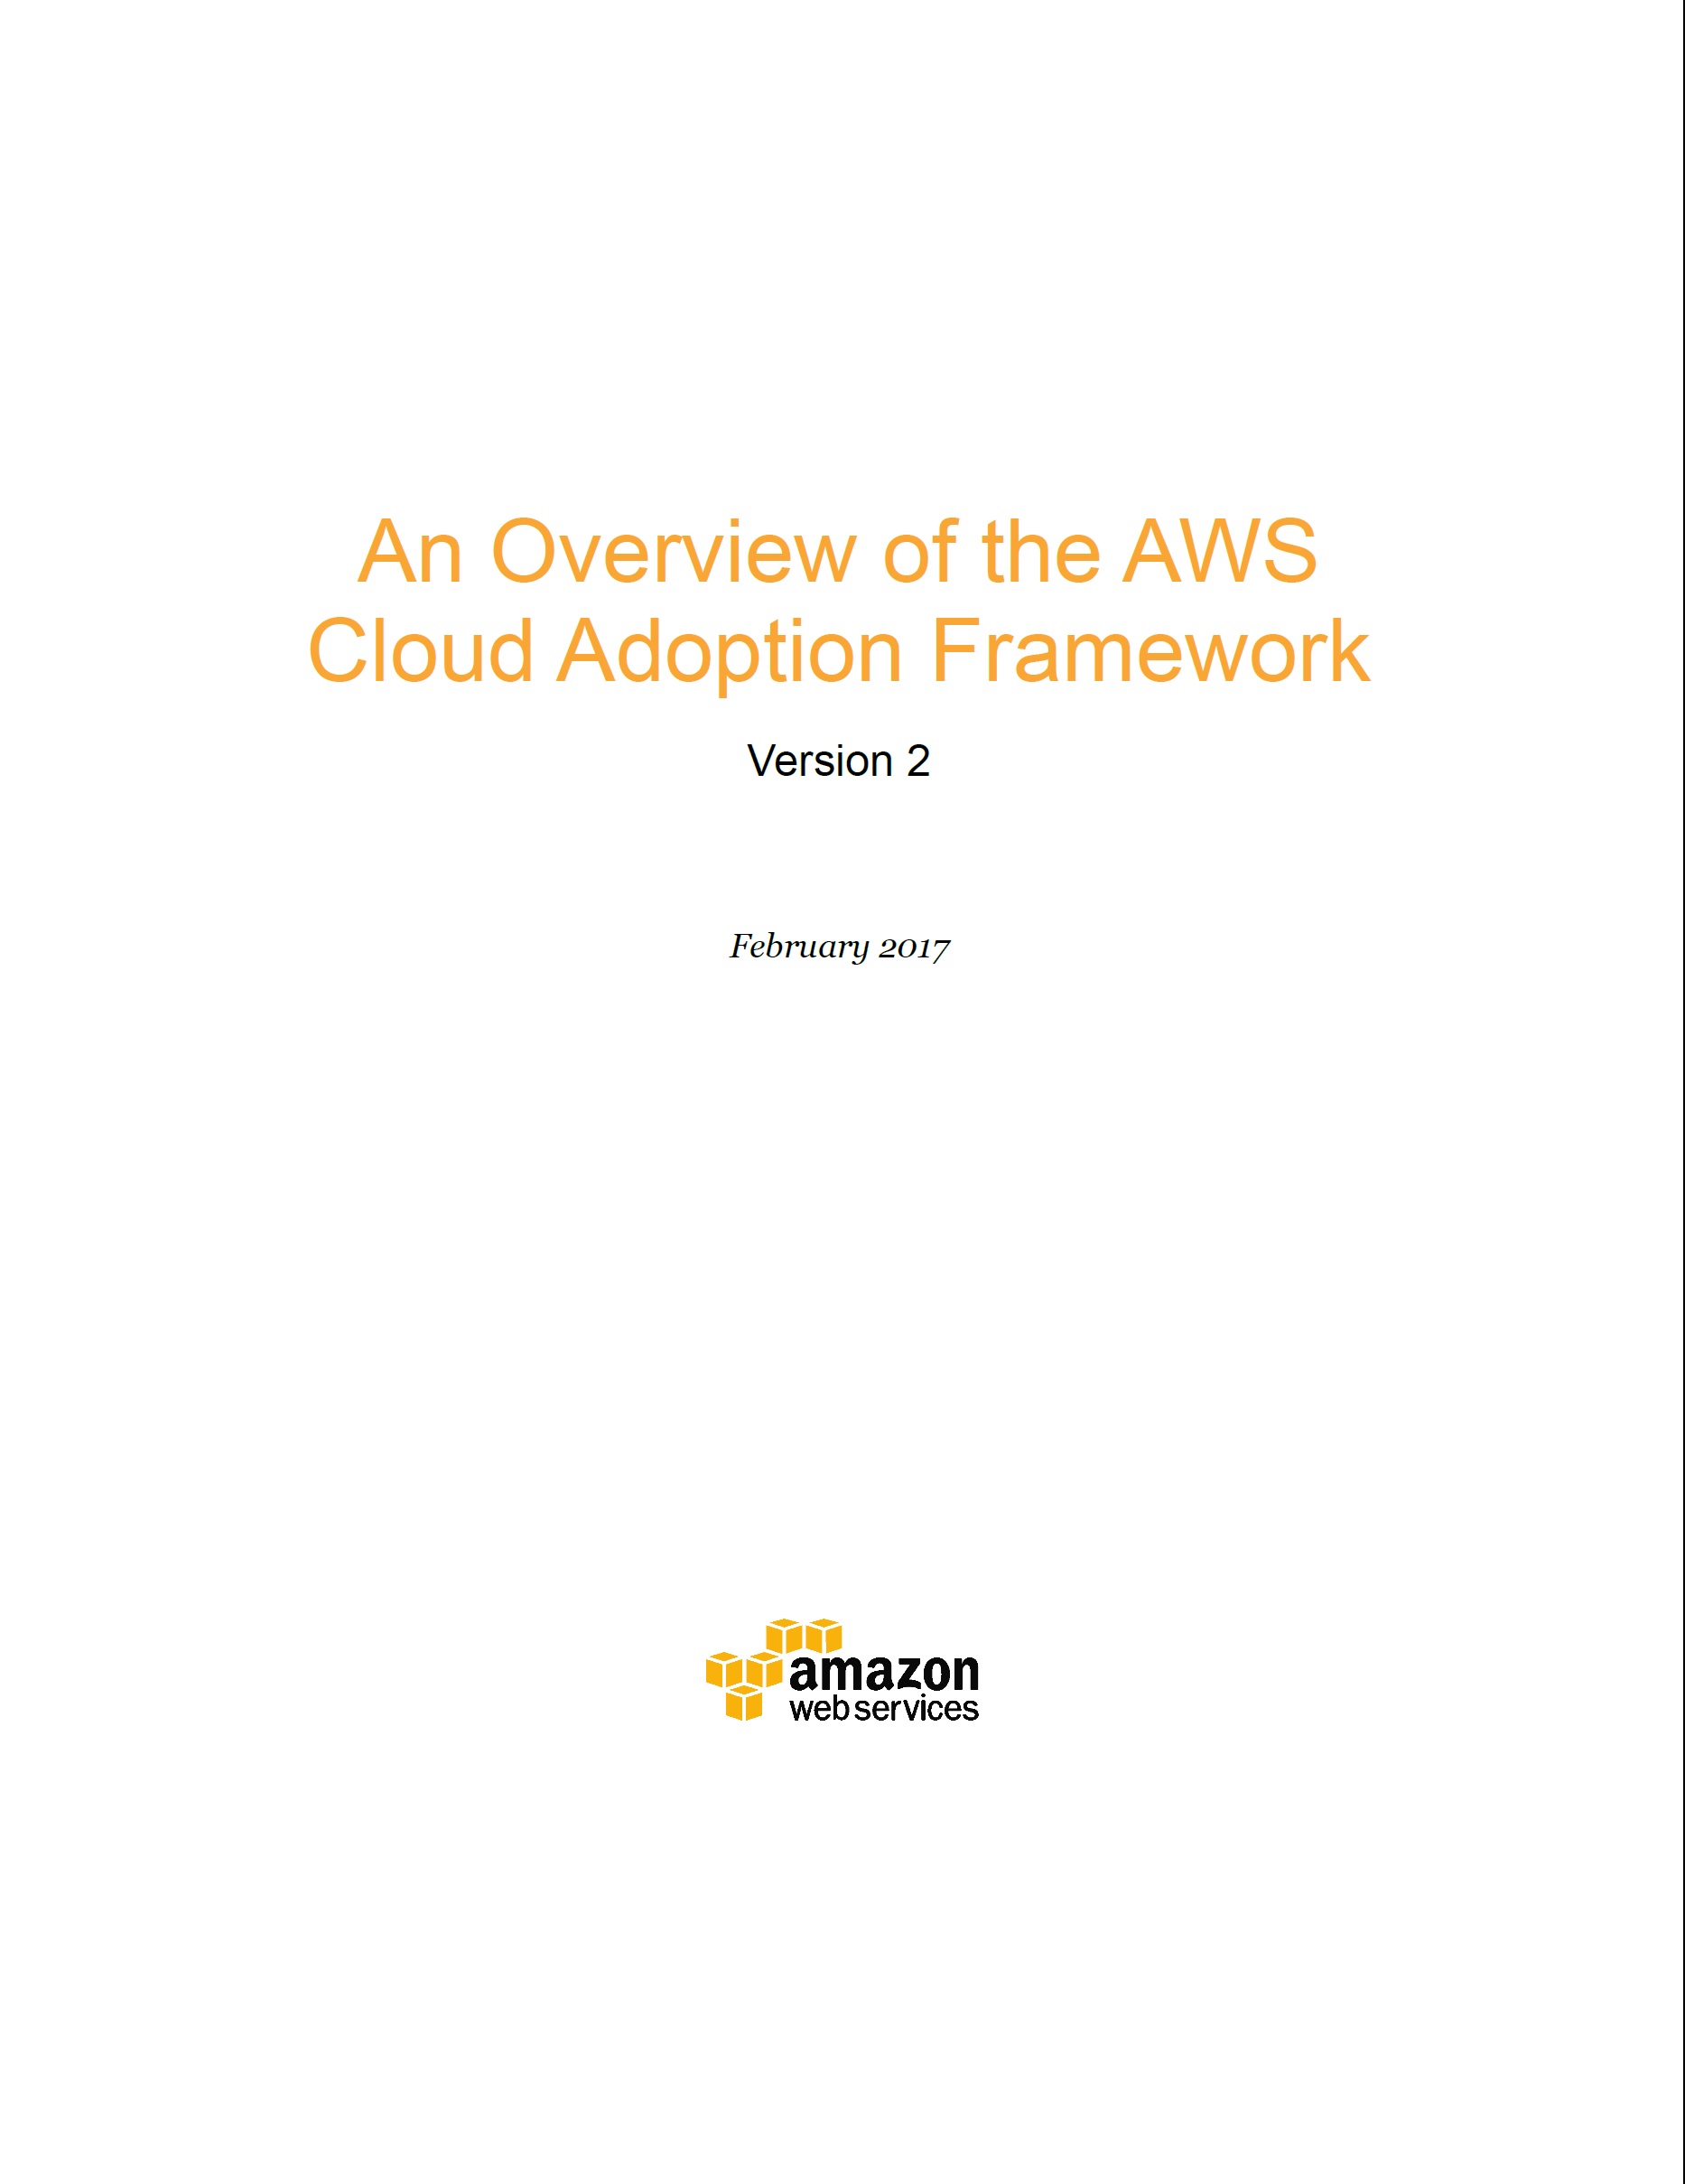 An Overview of the AWS Cloud Adoption Framework, AWS, 2017